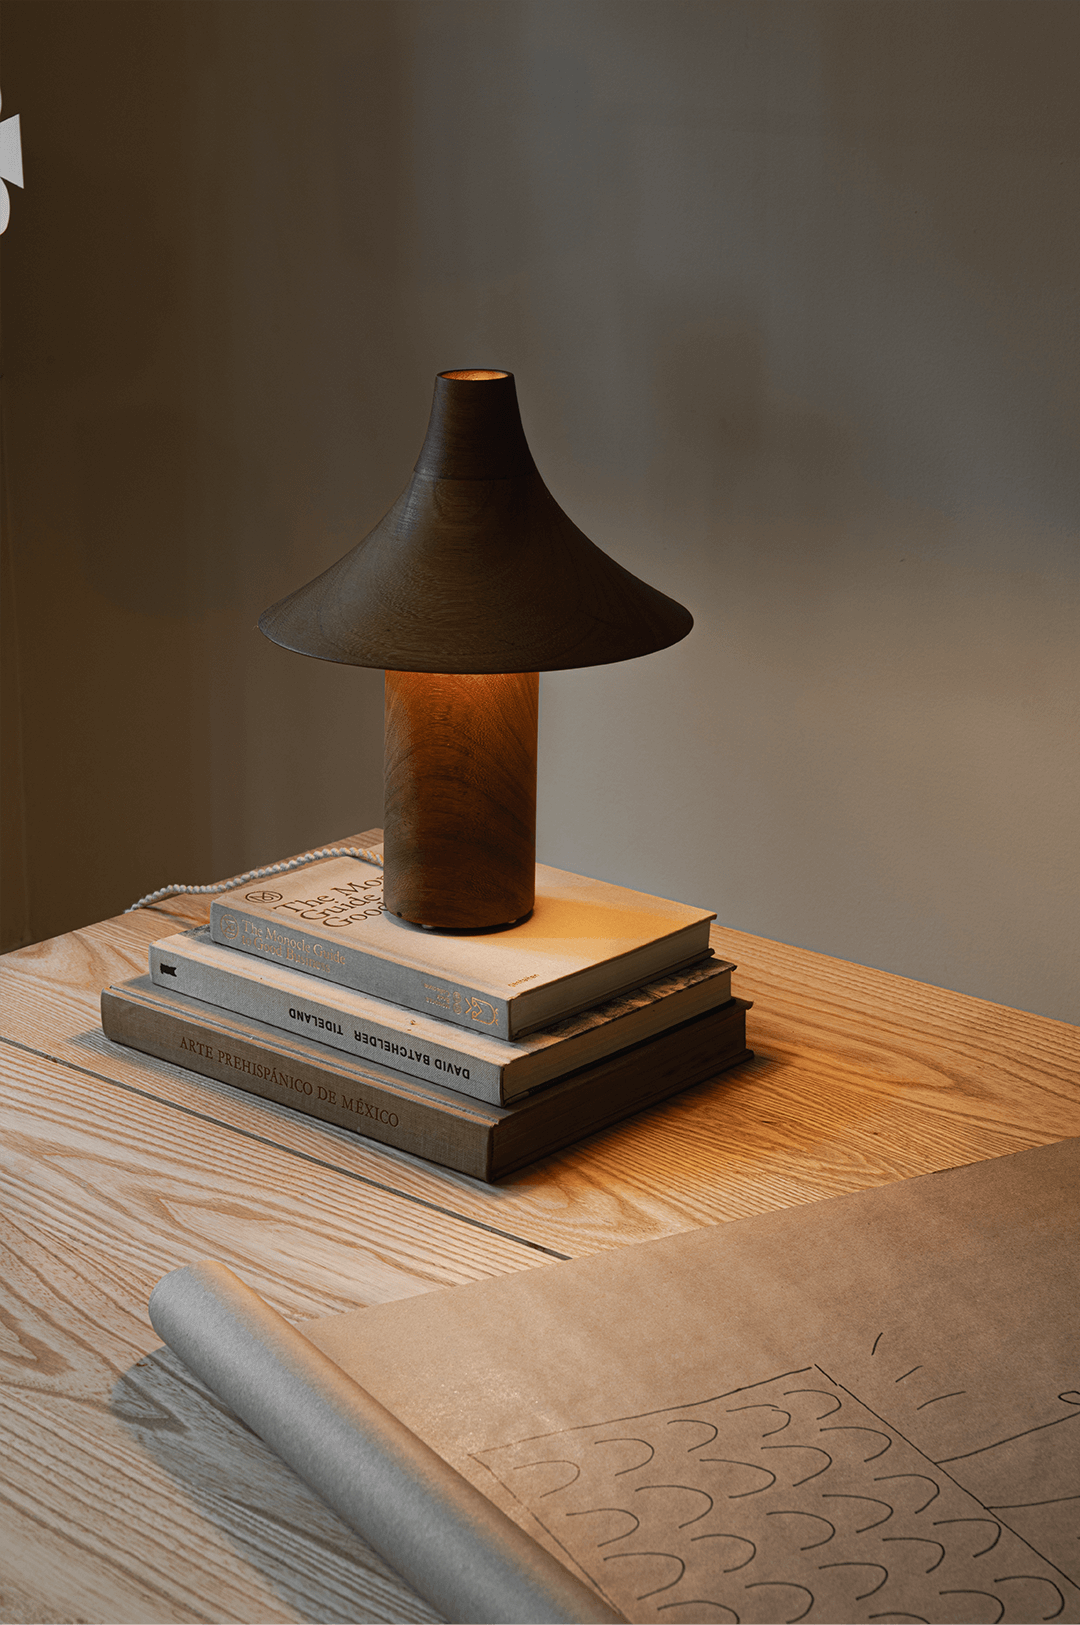 Kilzi lighting | Hat design table lamp for home decor, a elegant designer lamp of wood soft organic shapes